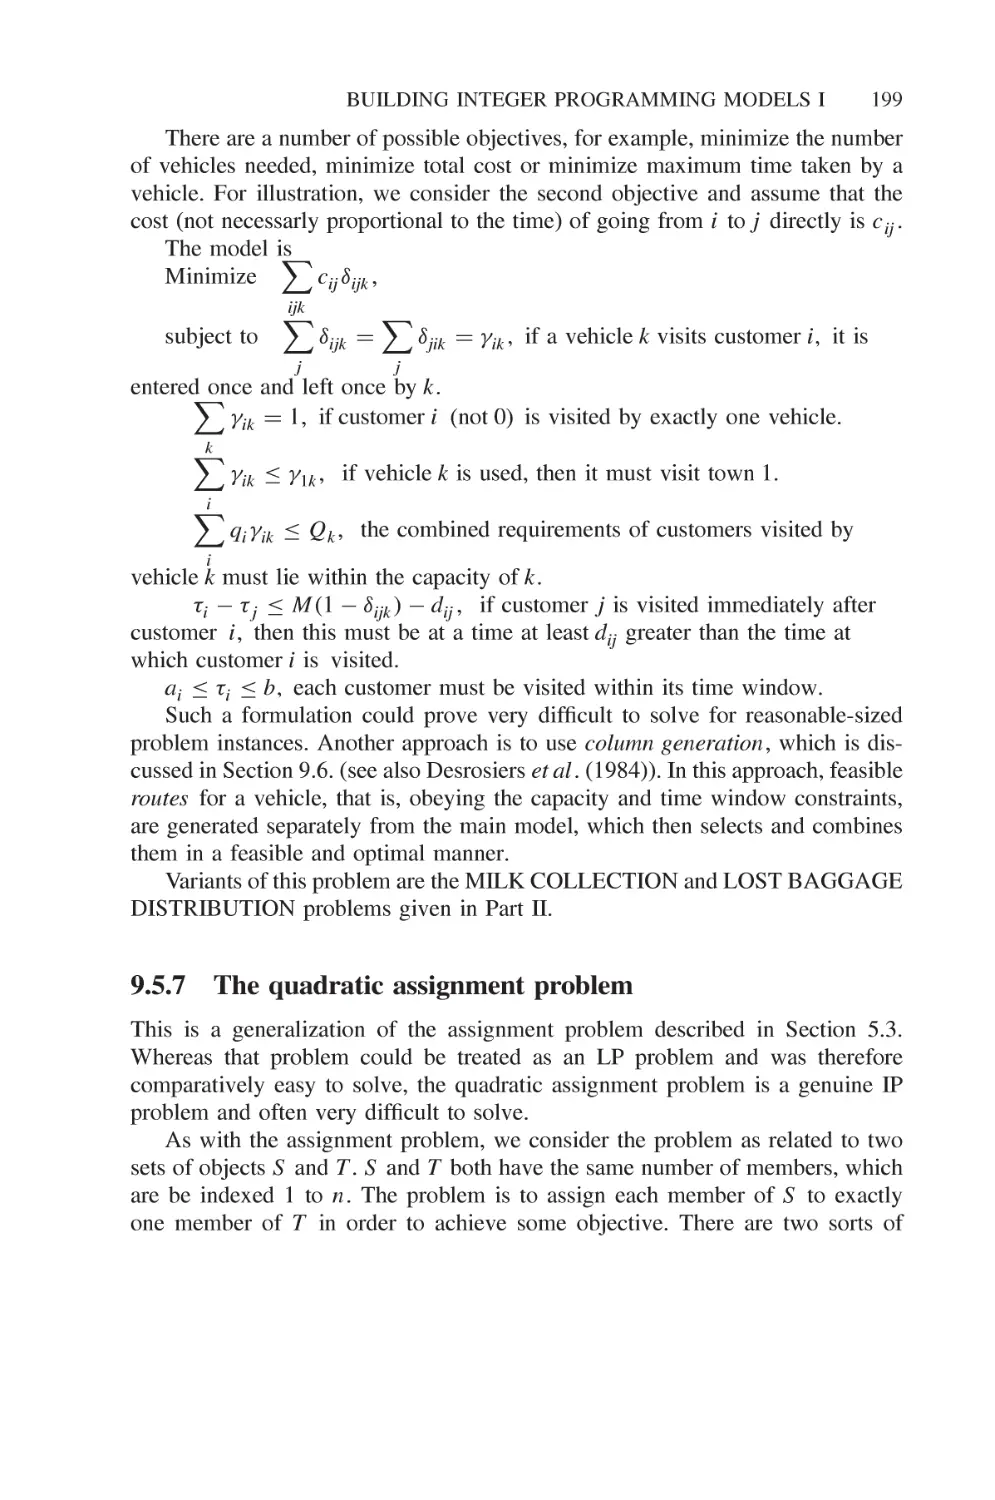 9.5.7 The quadratic assignment problem